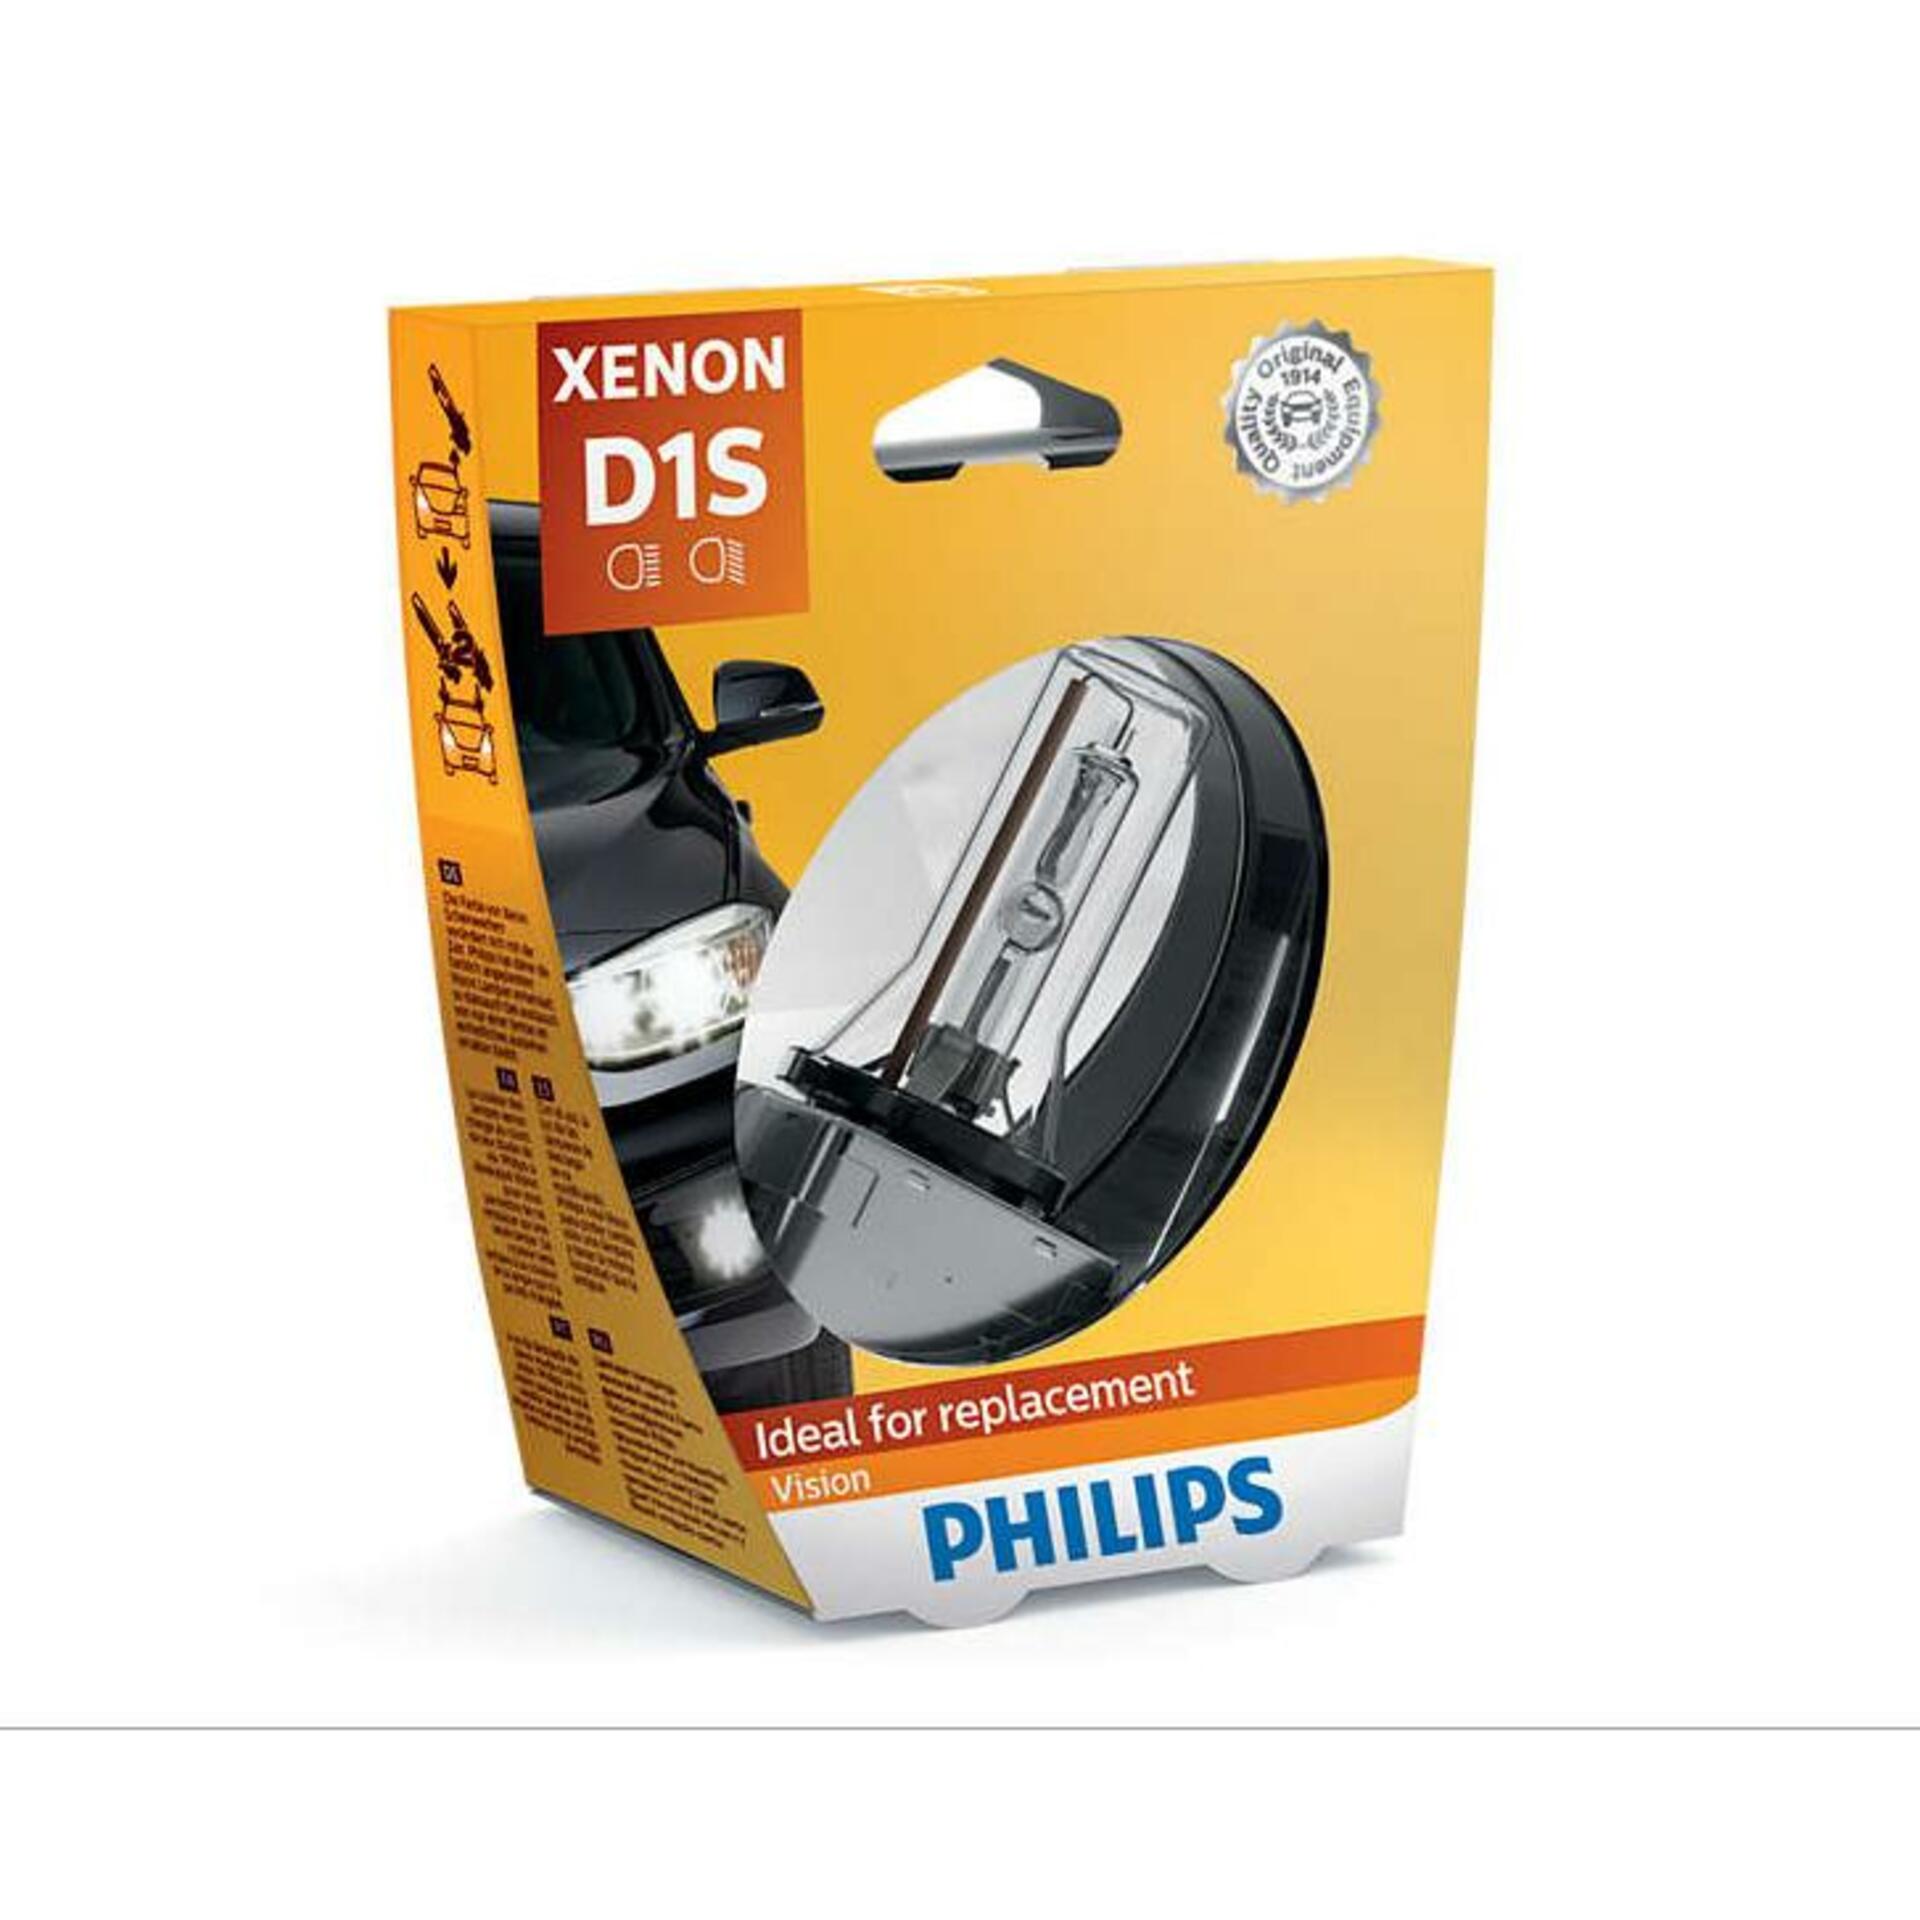 Philips Xenon Vision 85415VIS1 D1S 35 W